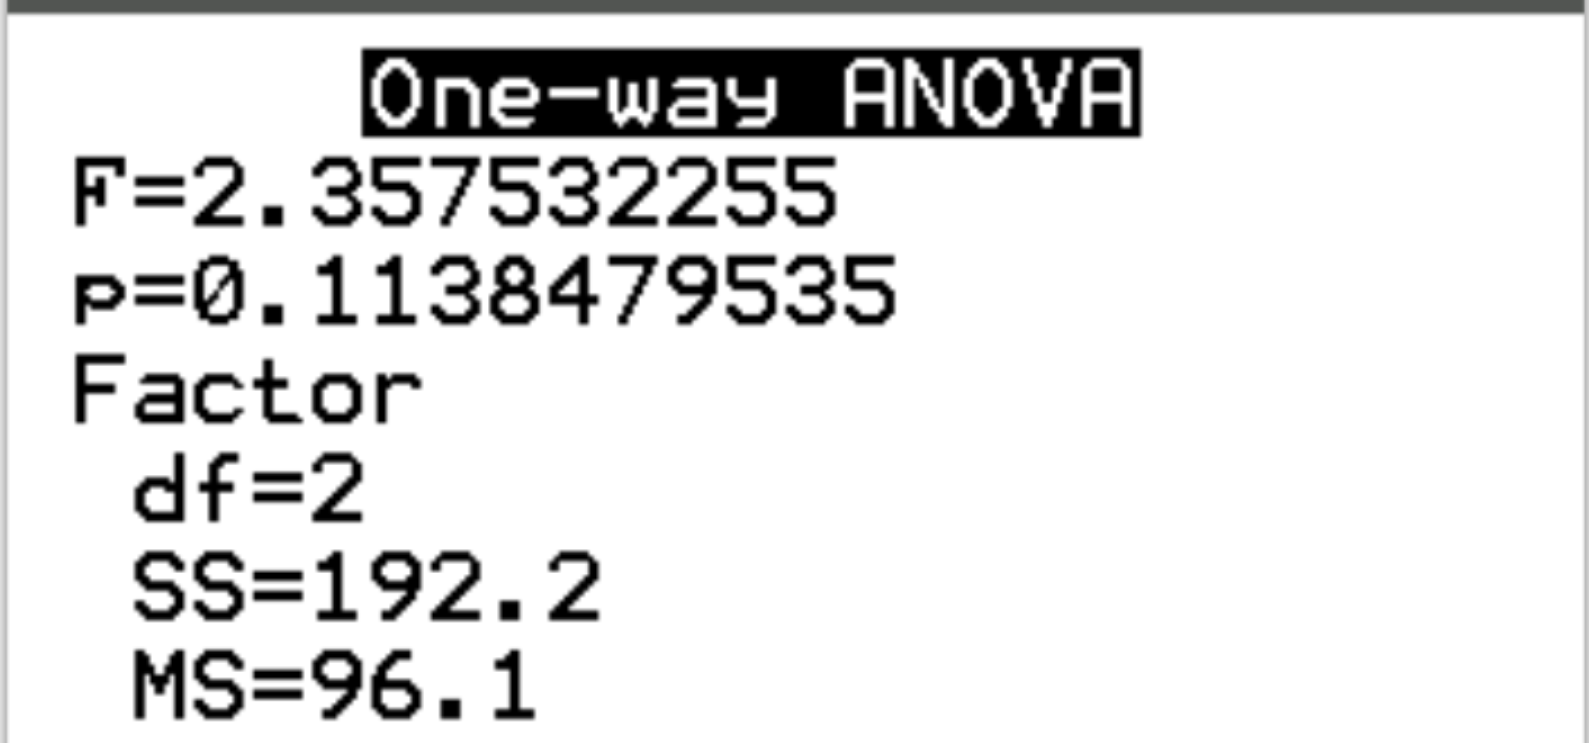 One-way ANOVA results in TI-84